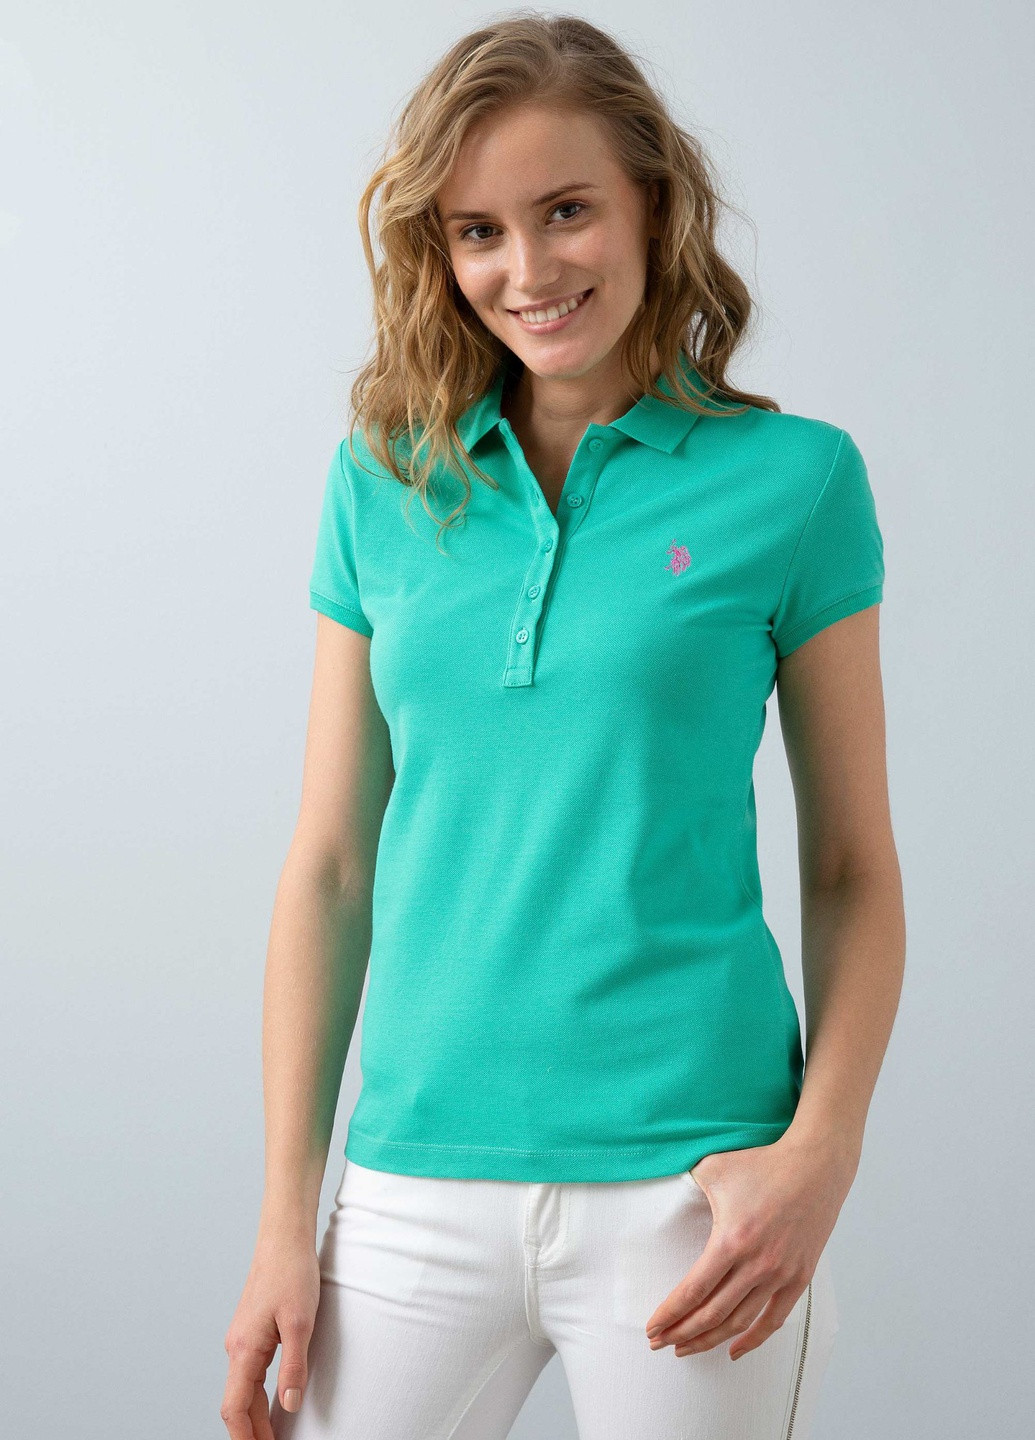 Мятная женская футболка-футболка U.S. Polo Assn.